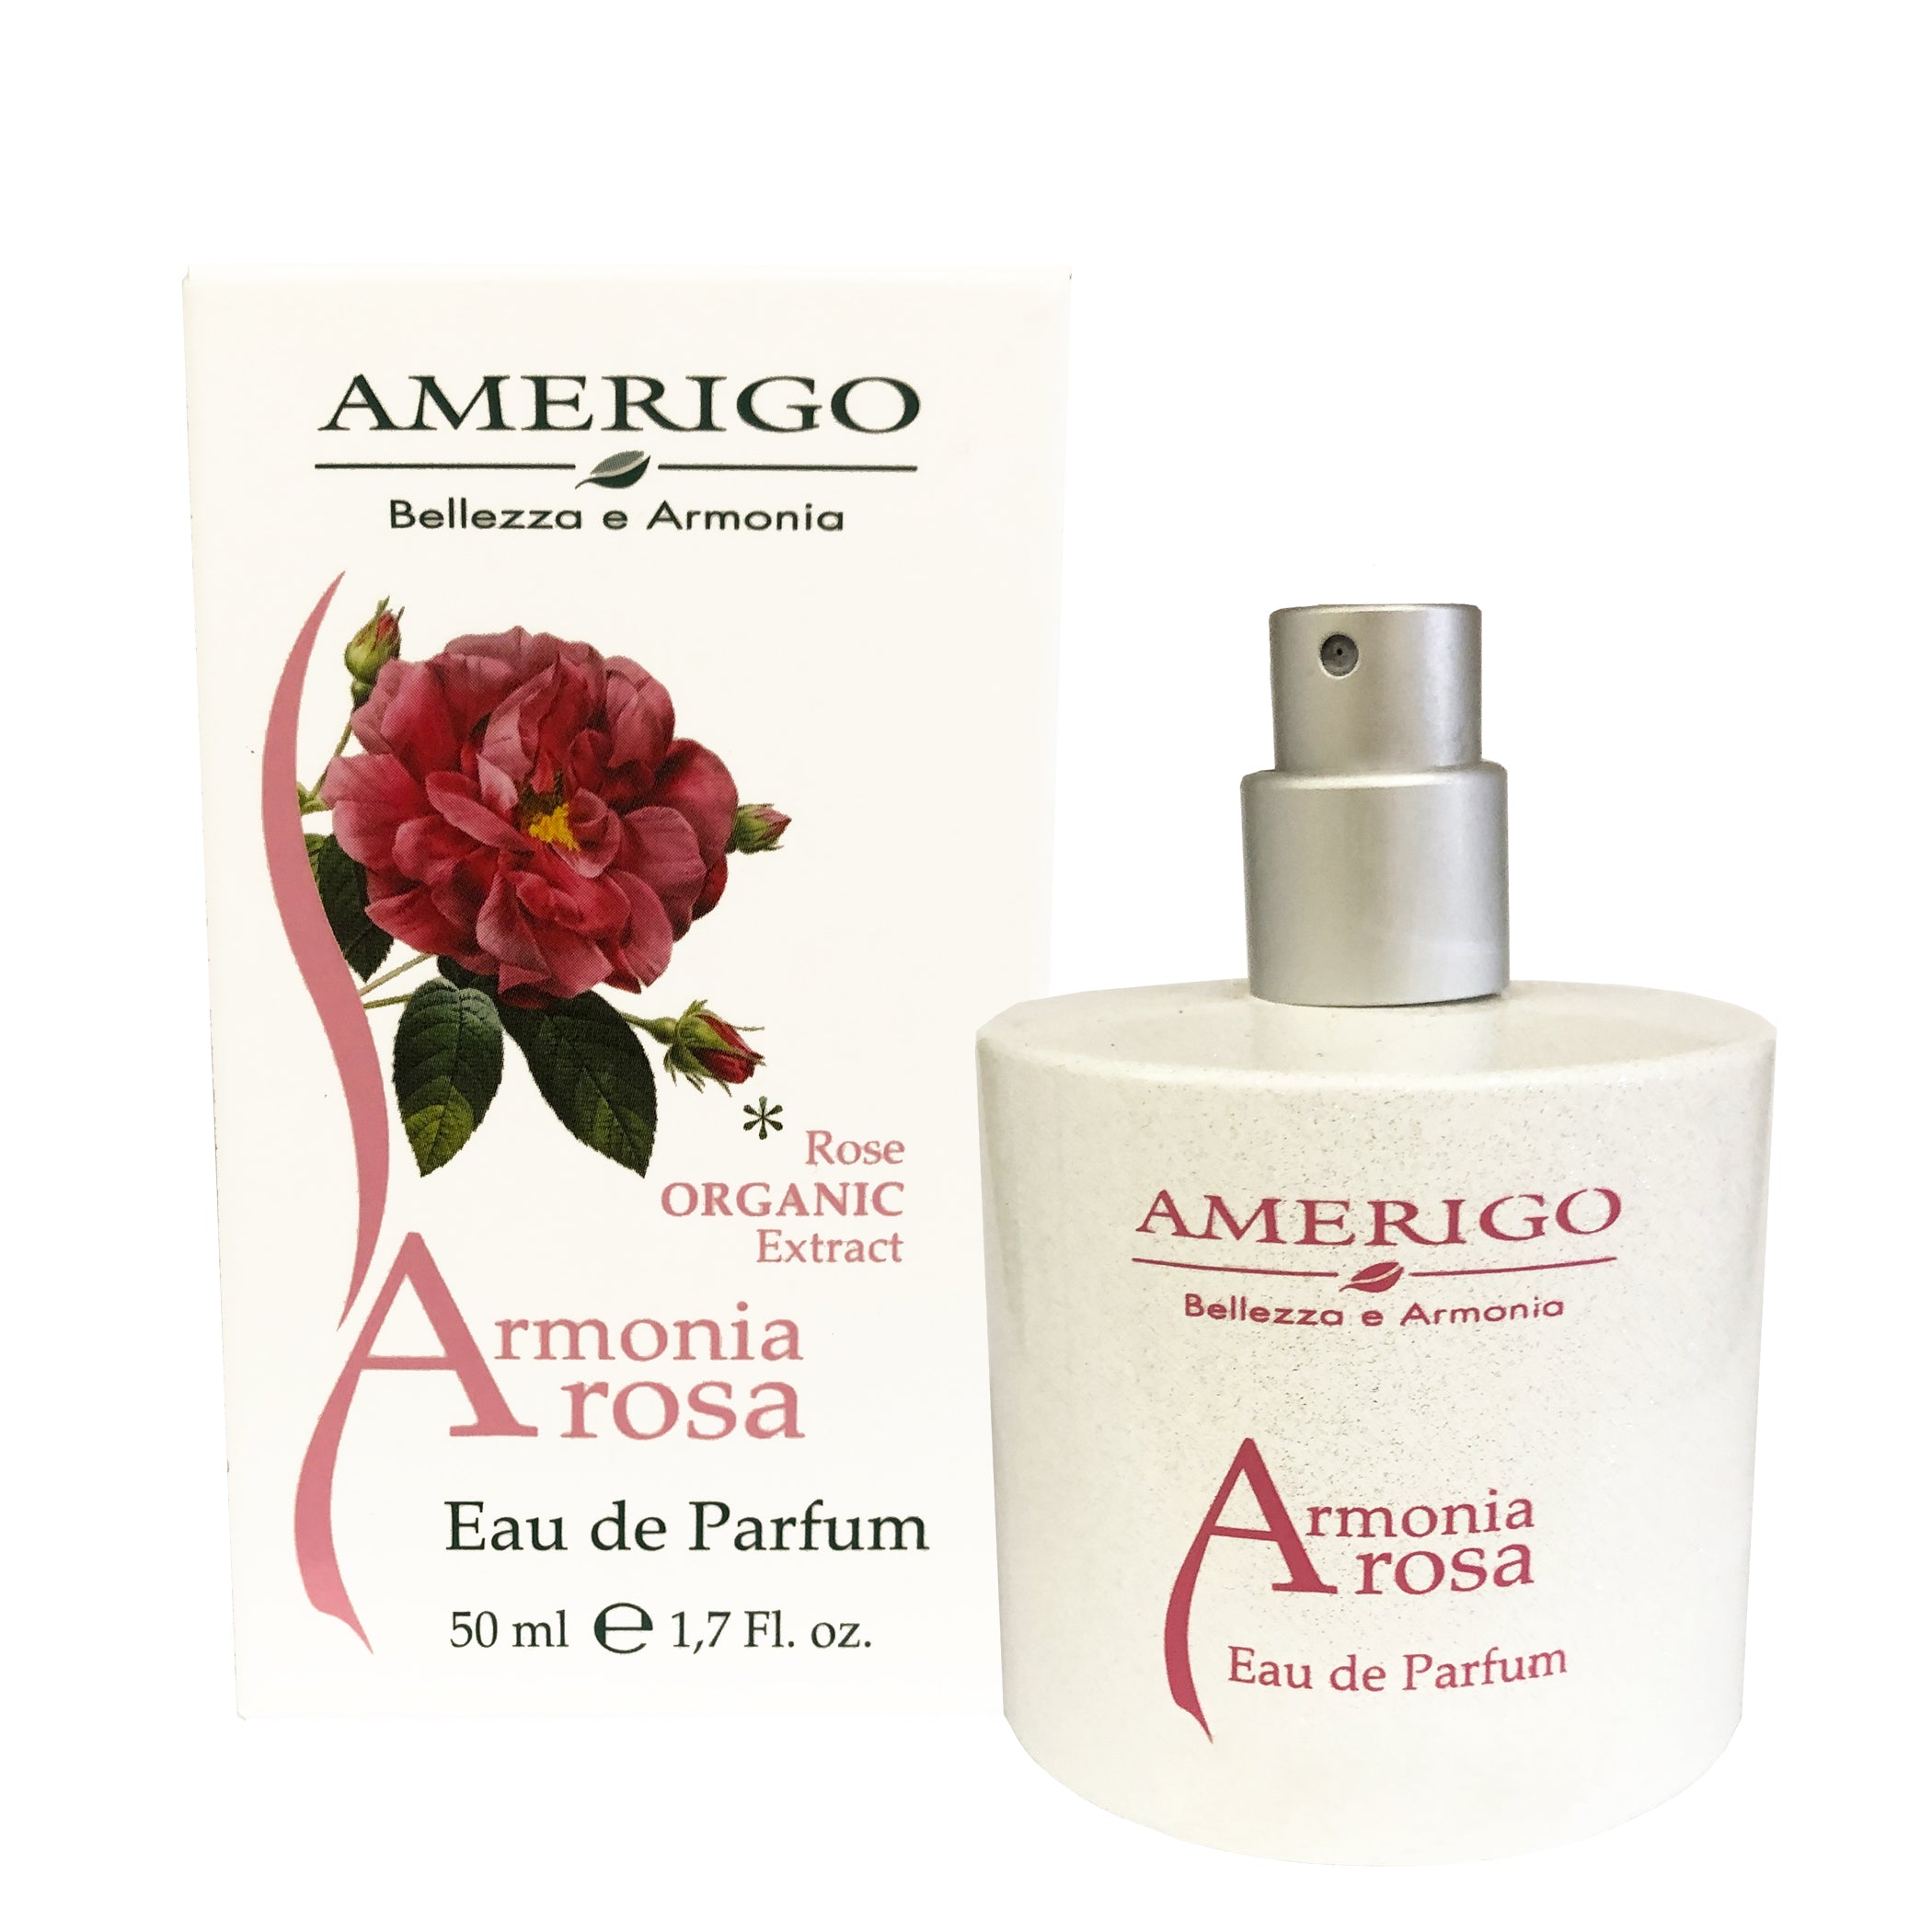 Prodotti Armonia Rosa - Amerigo, Erboristeria Armonie Naturali